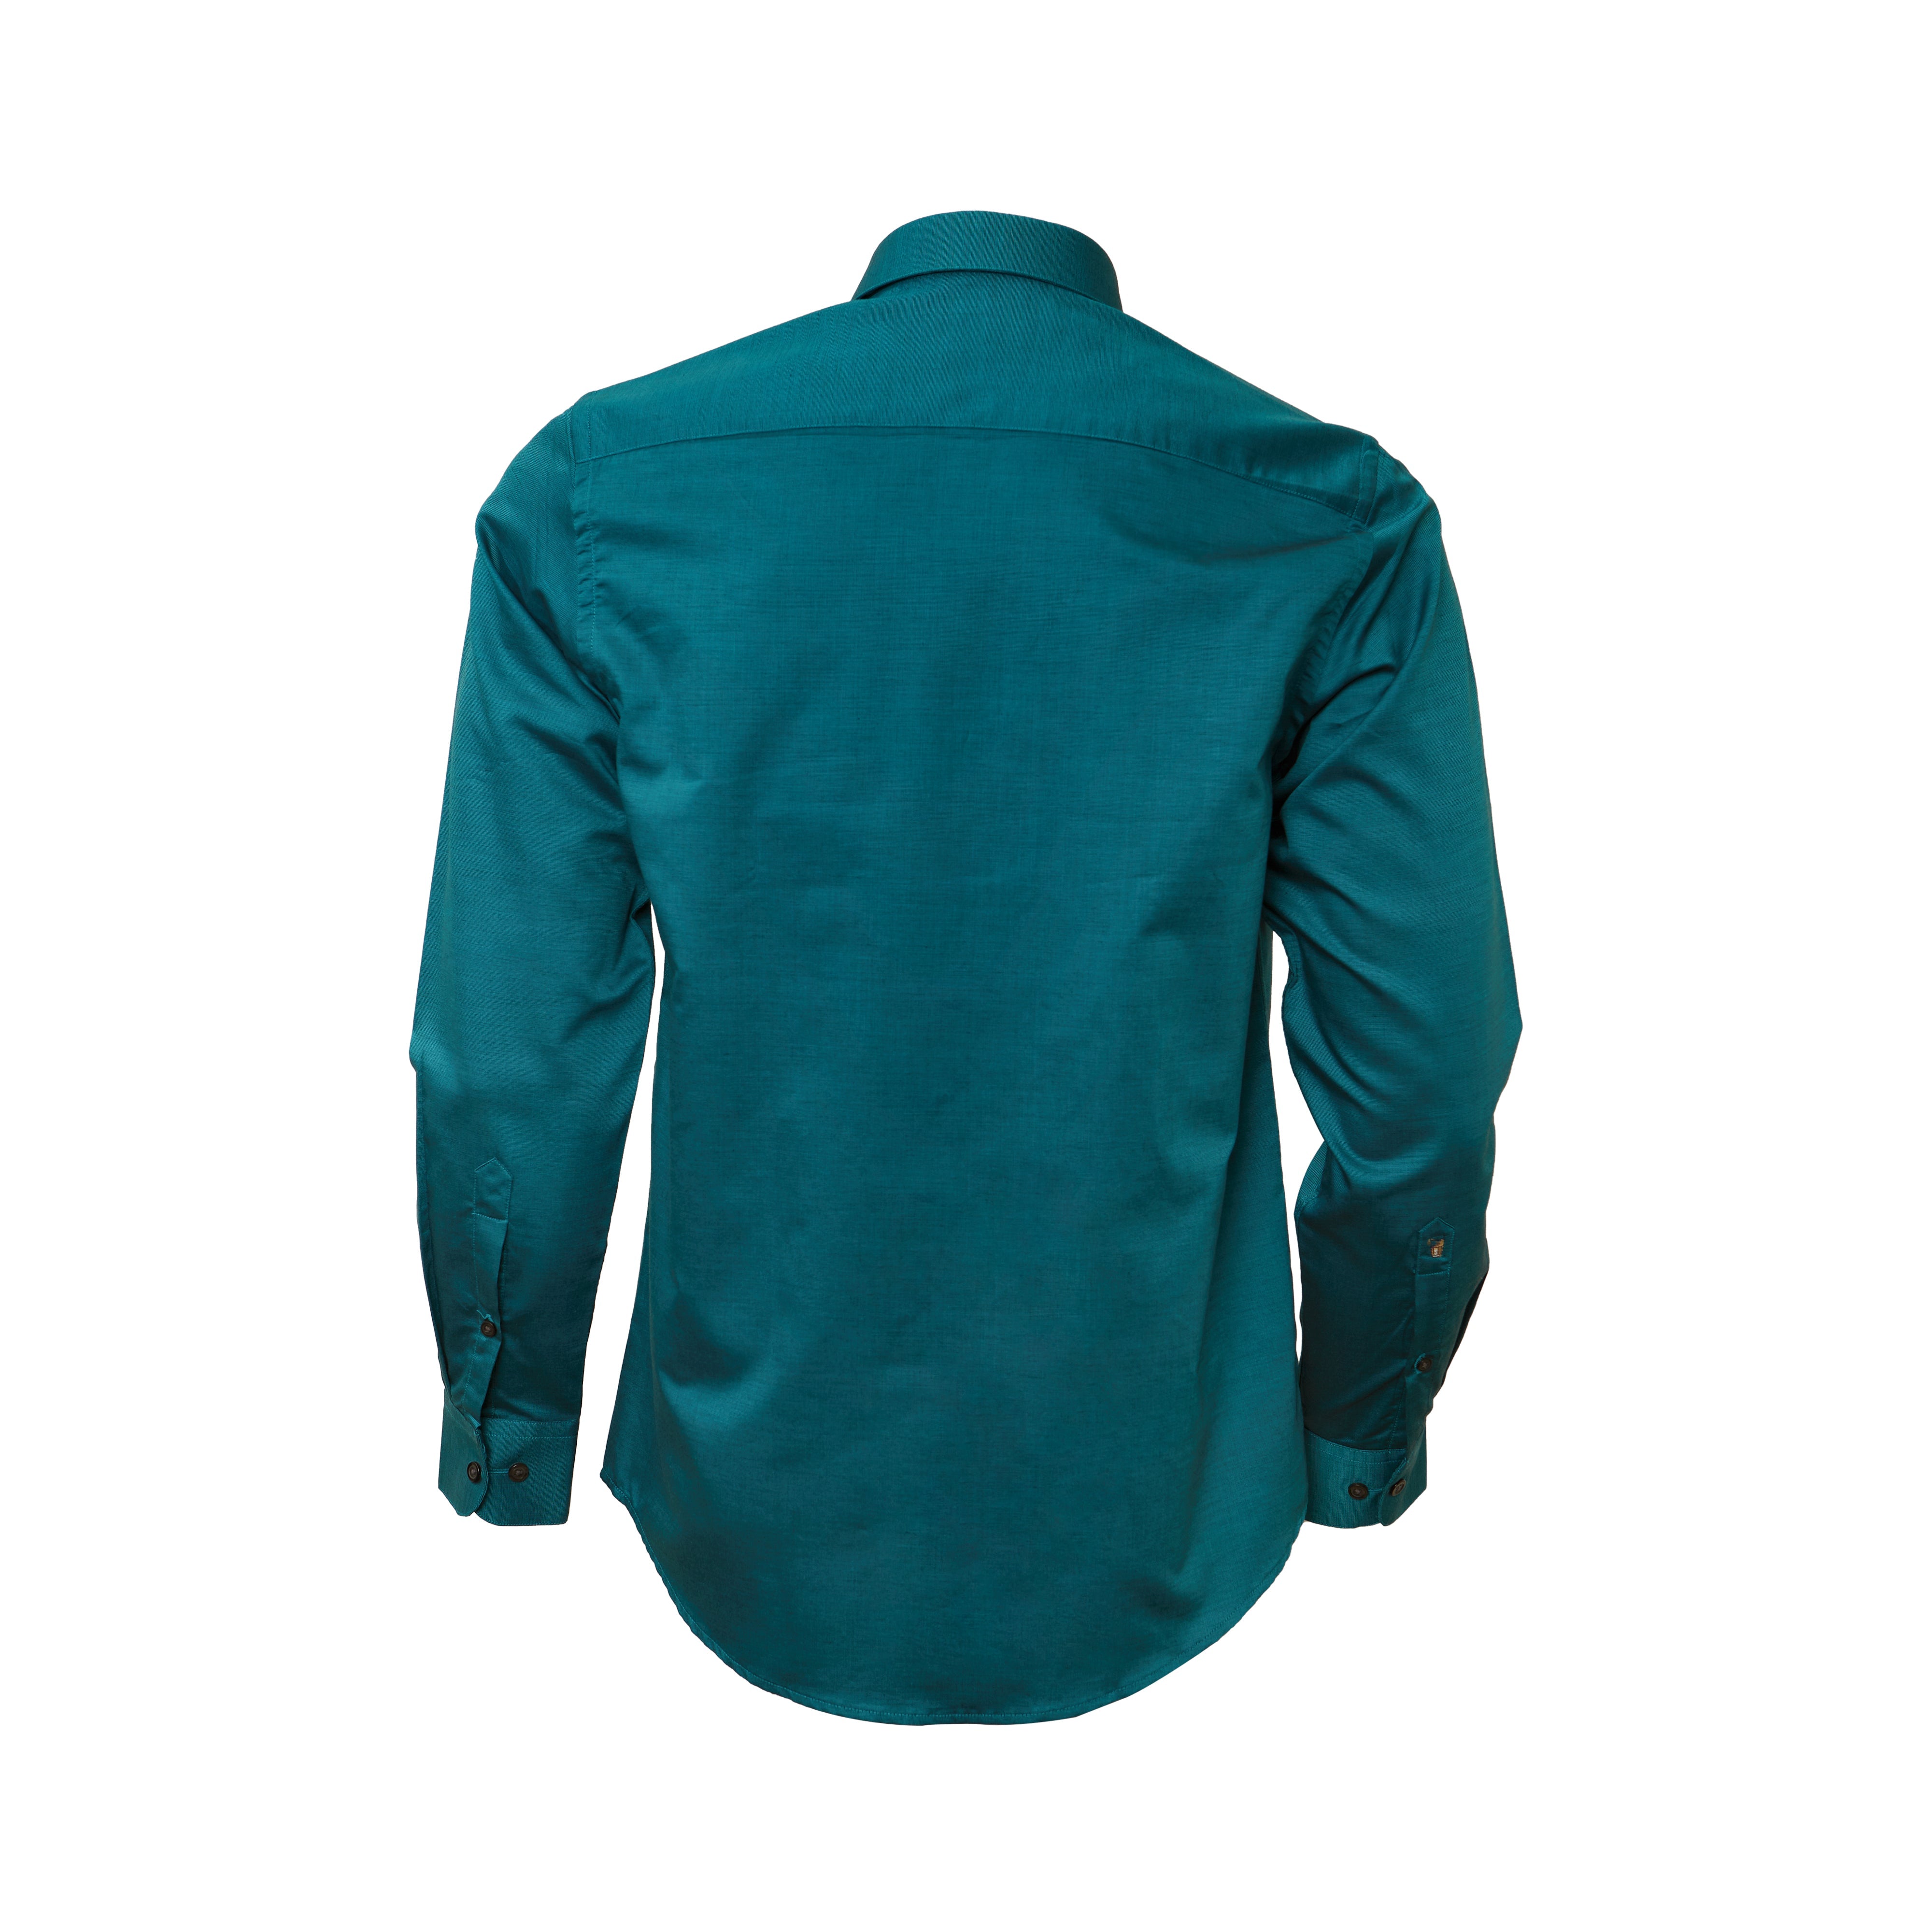 Supima Cotton Petrol Green Full-sleeved shirt